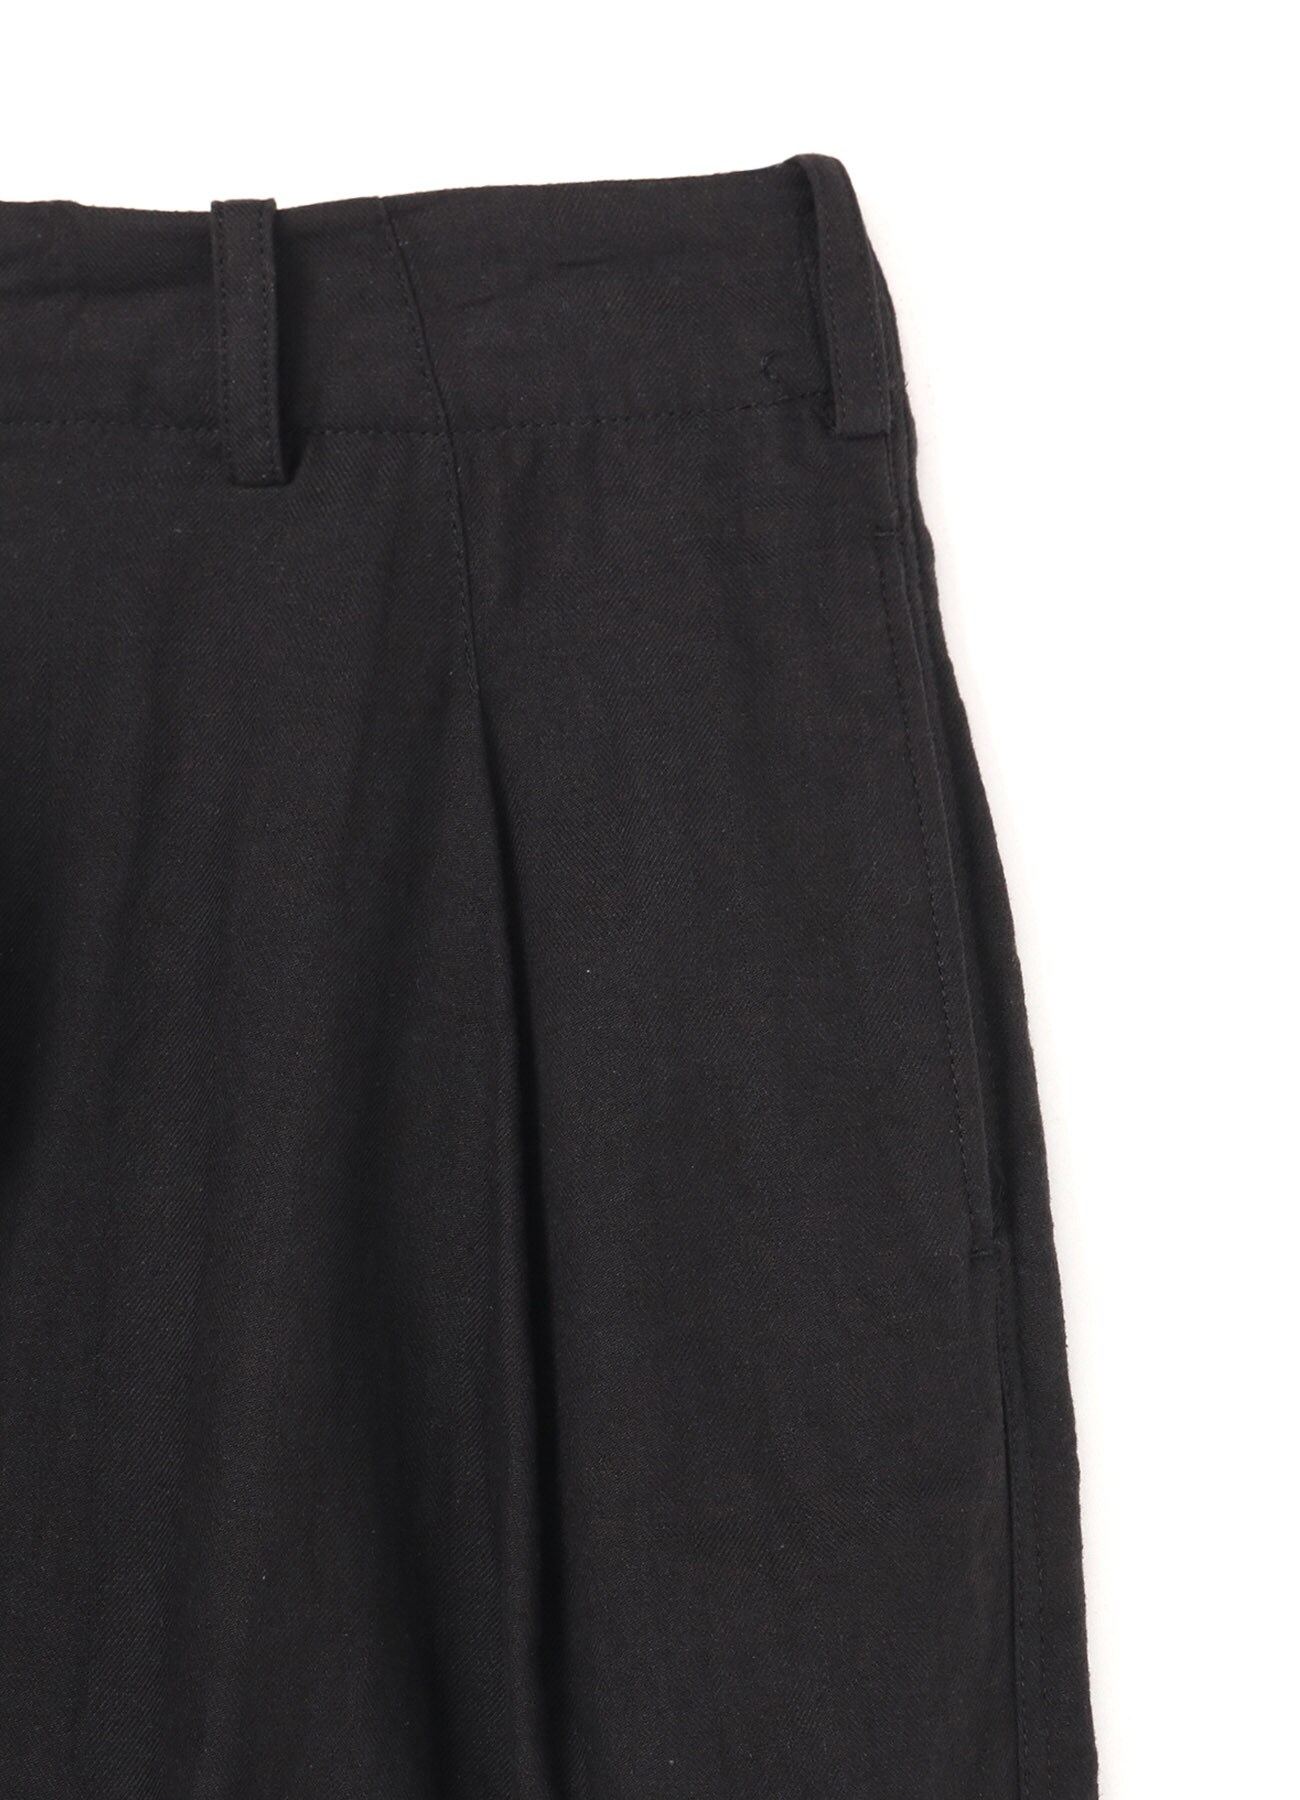 Li/C Washer Twill Indian Arabesque Pattern Layer One Tack 6-quarter-length Wrap Pants